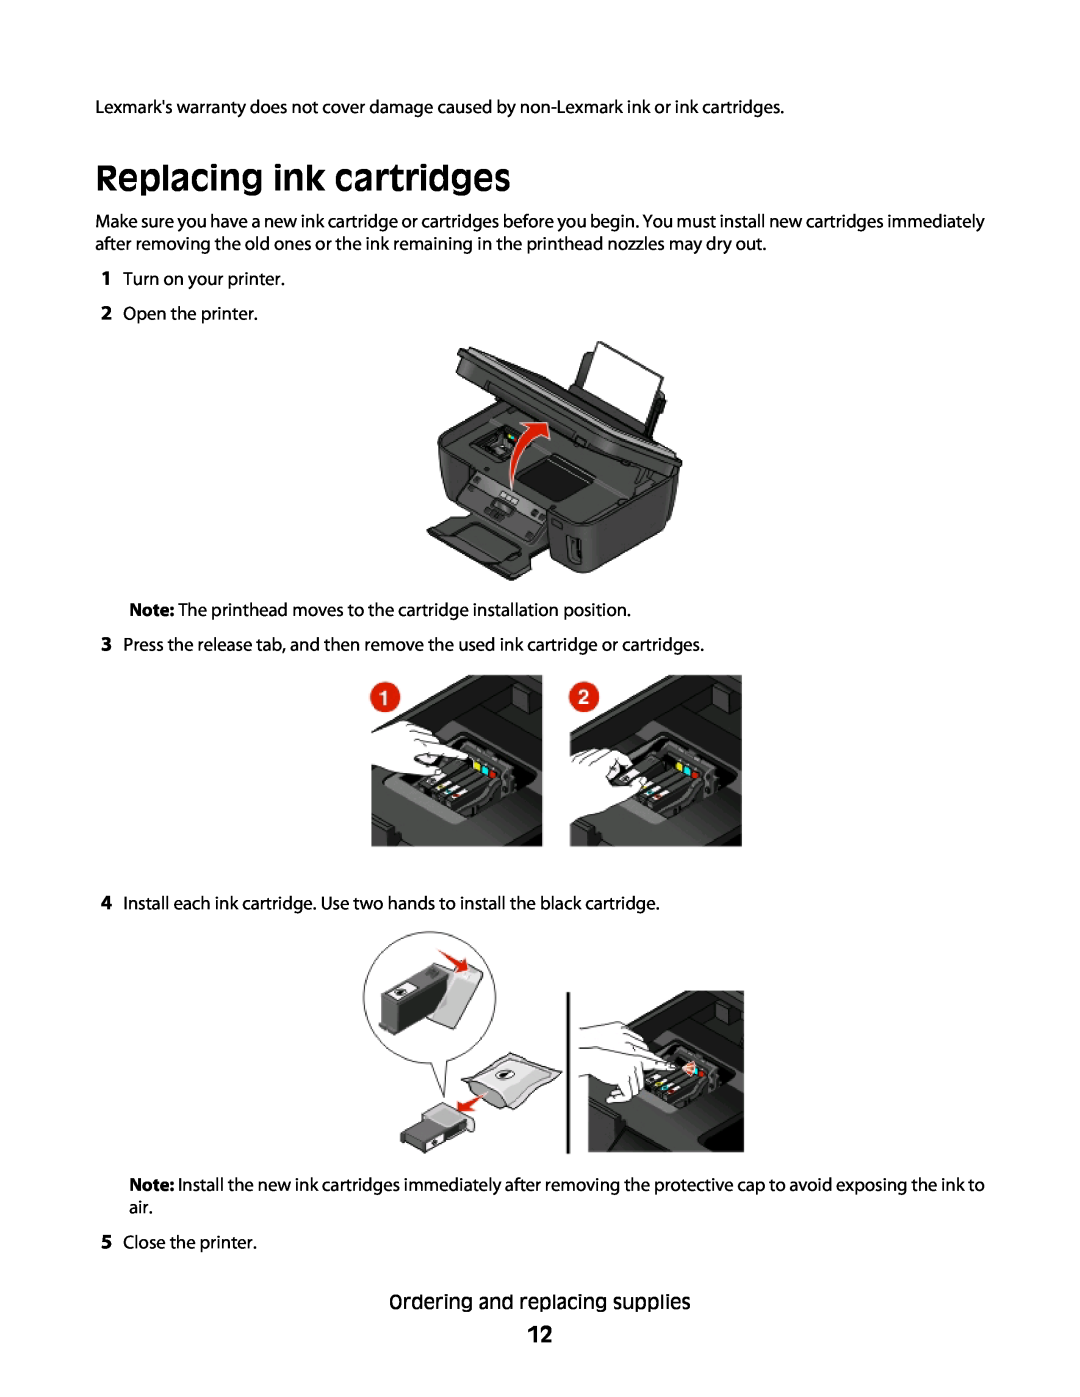 Lexmark 101, 10E manual Replacing ink cartridges 